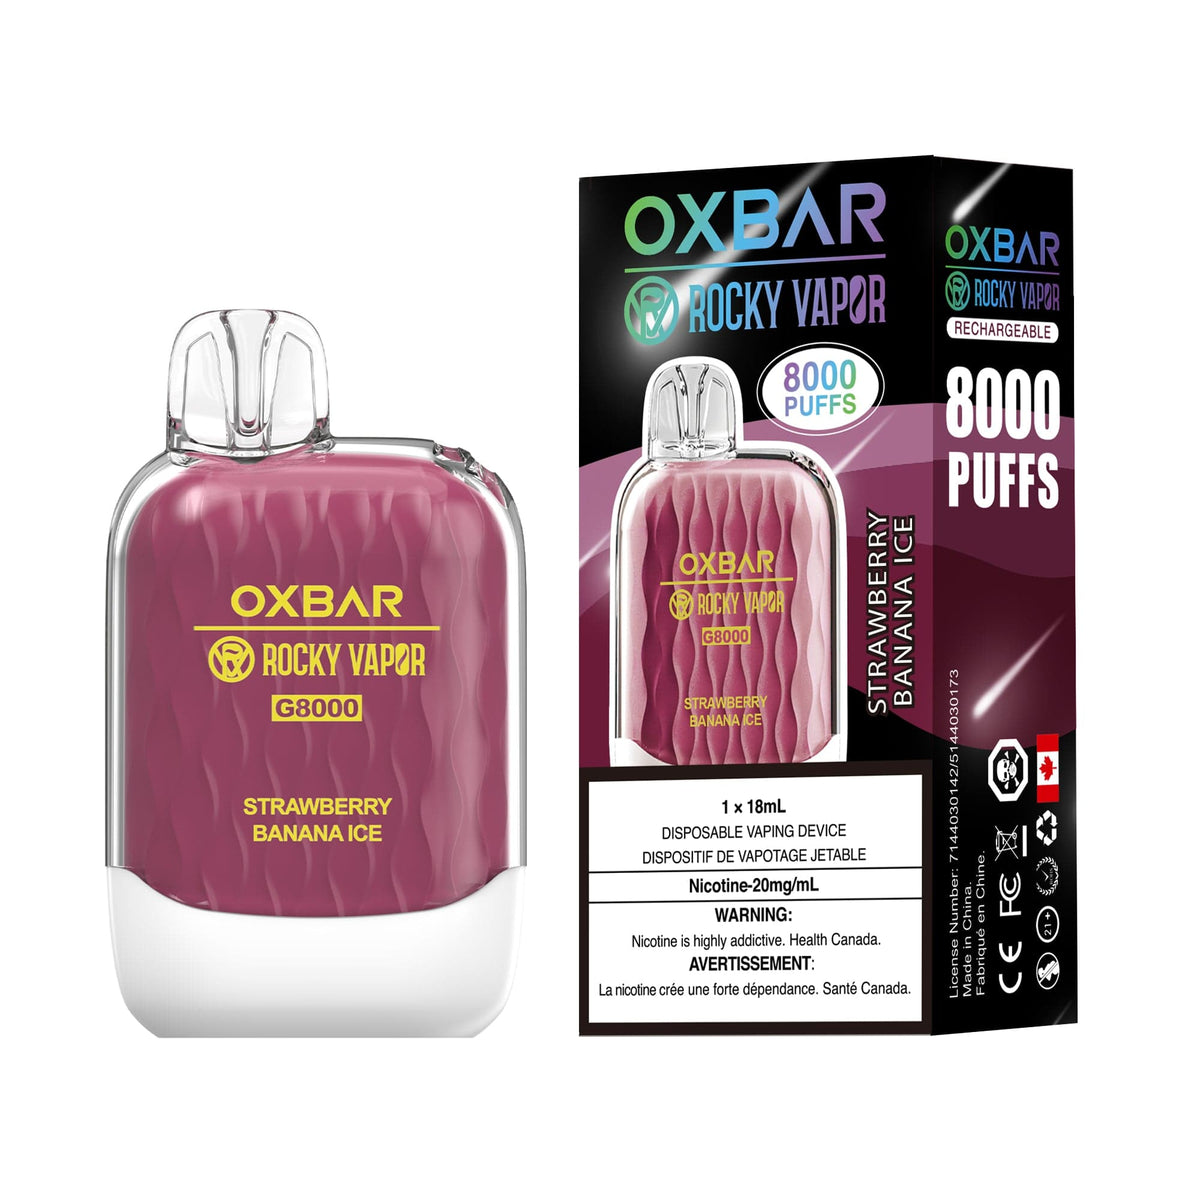 OXBAR x Rocky Vapor G8000 - Strawberry Banana Ice Disposable Vape available on Canada online vape shop